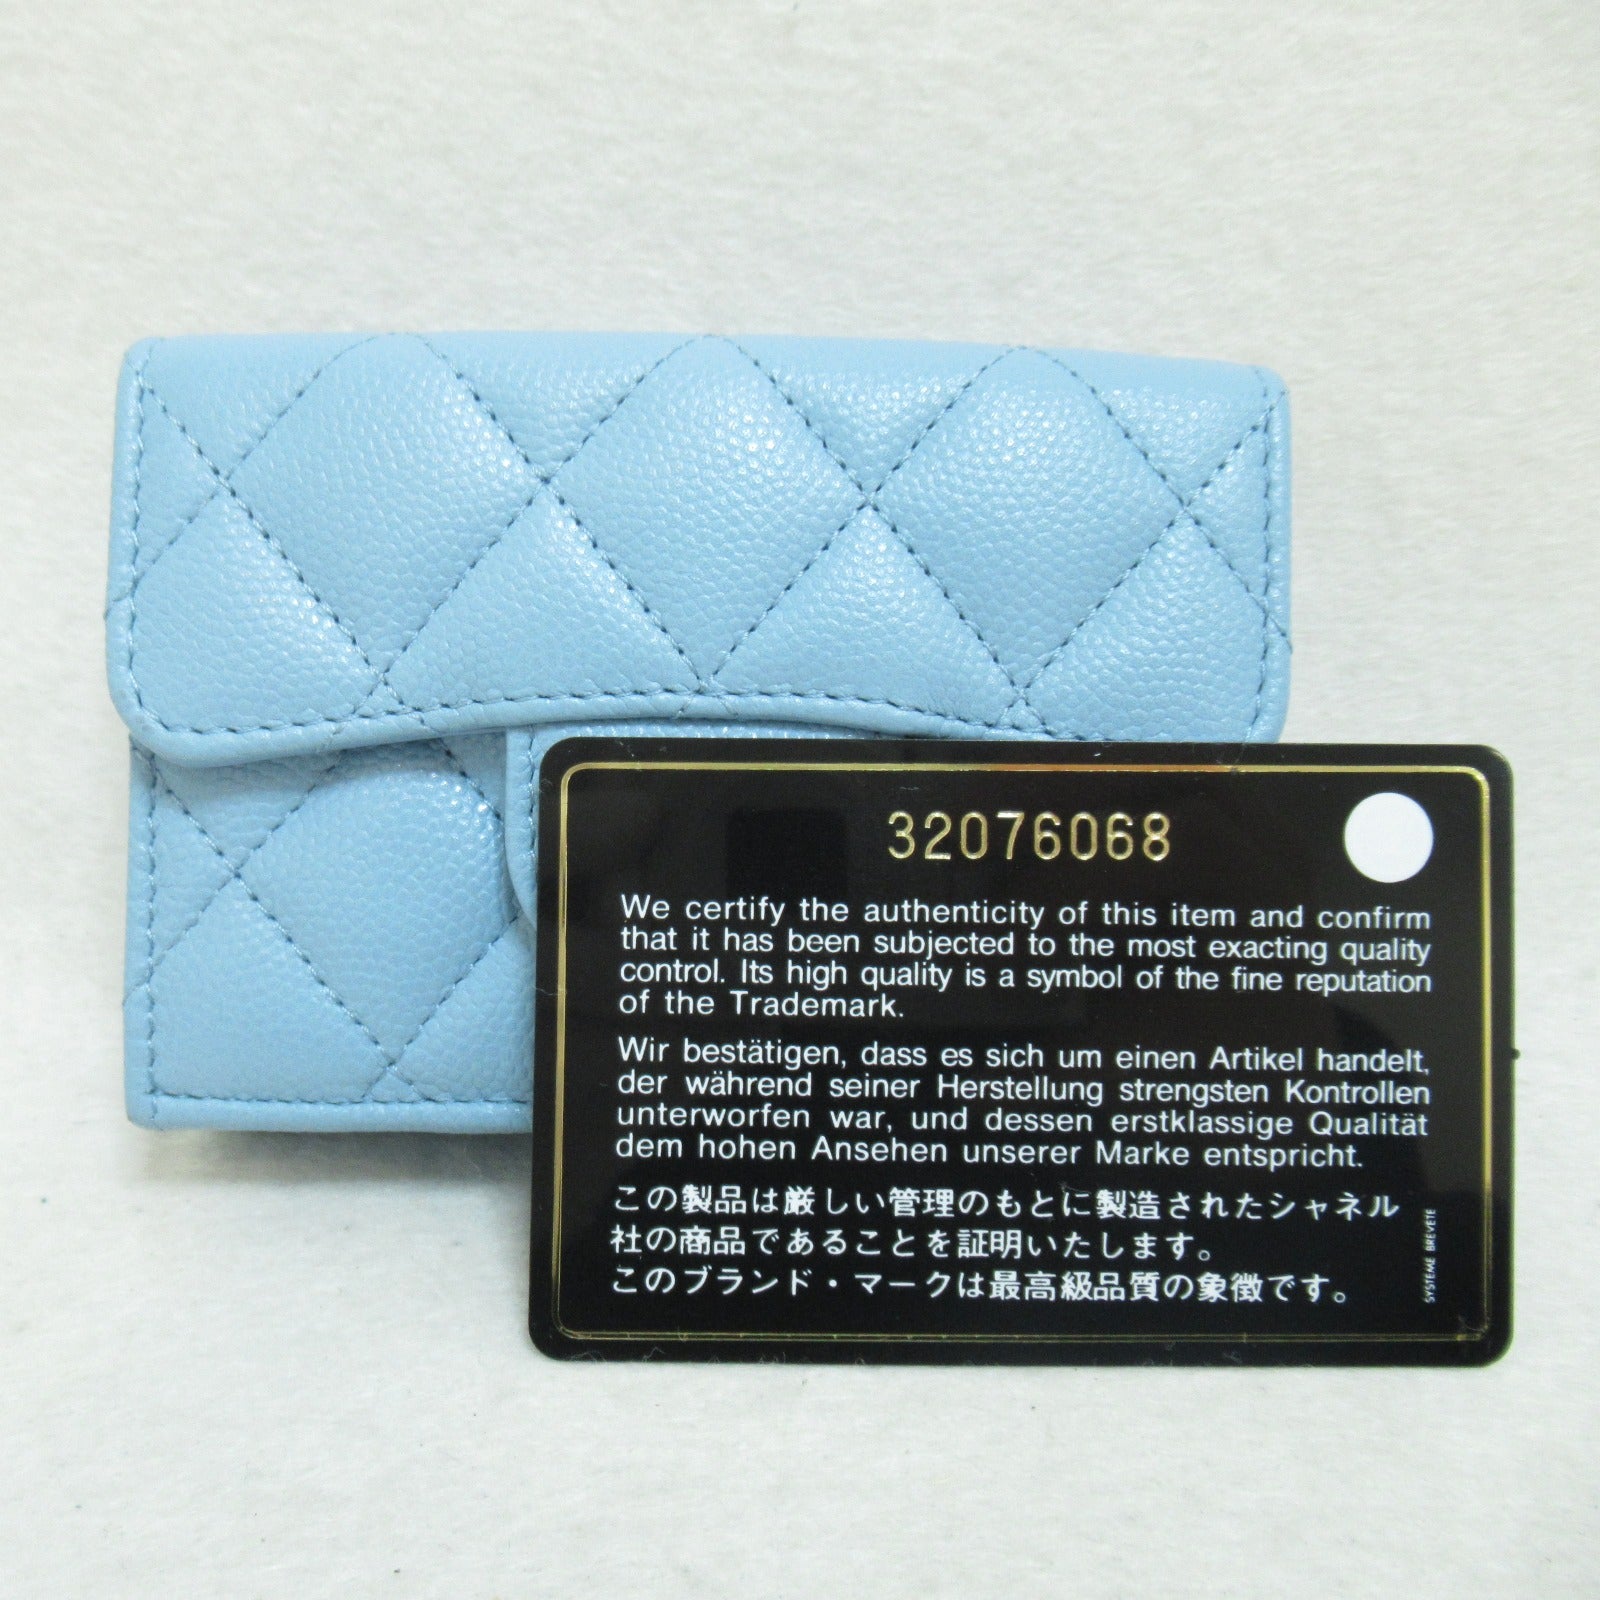 Chanel Three Fold Wallet Three Folded Wallet Caviar S (Green )  Blue